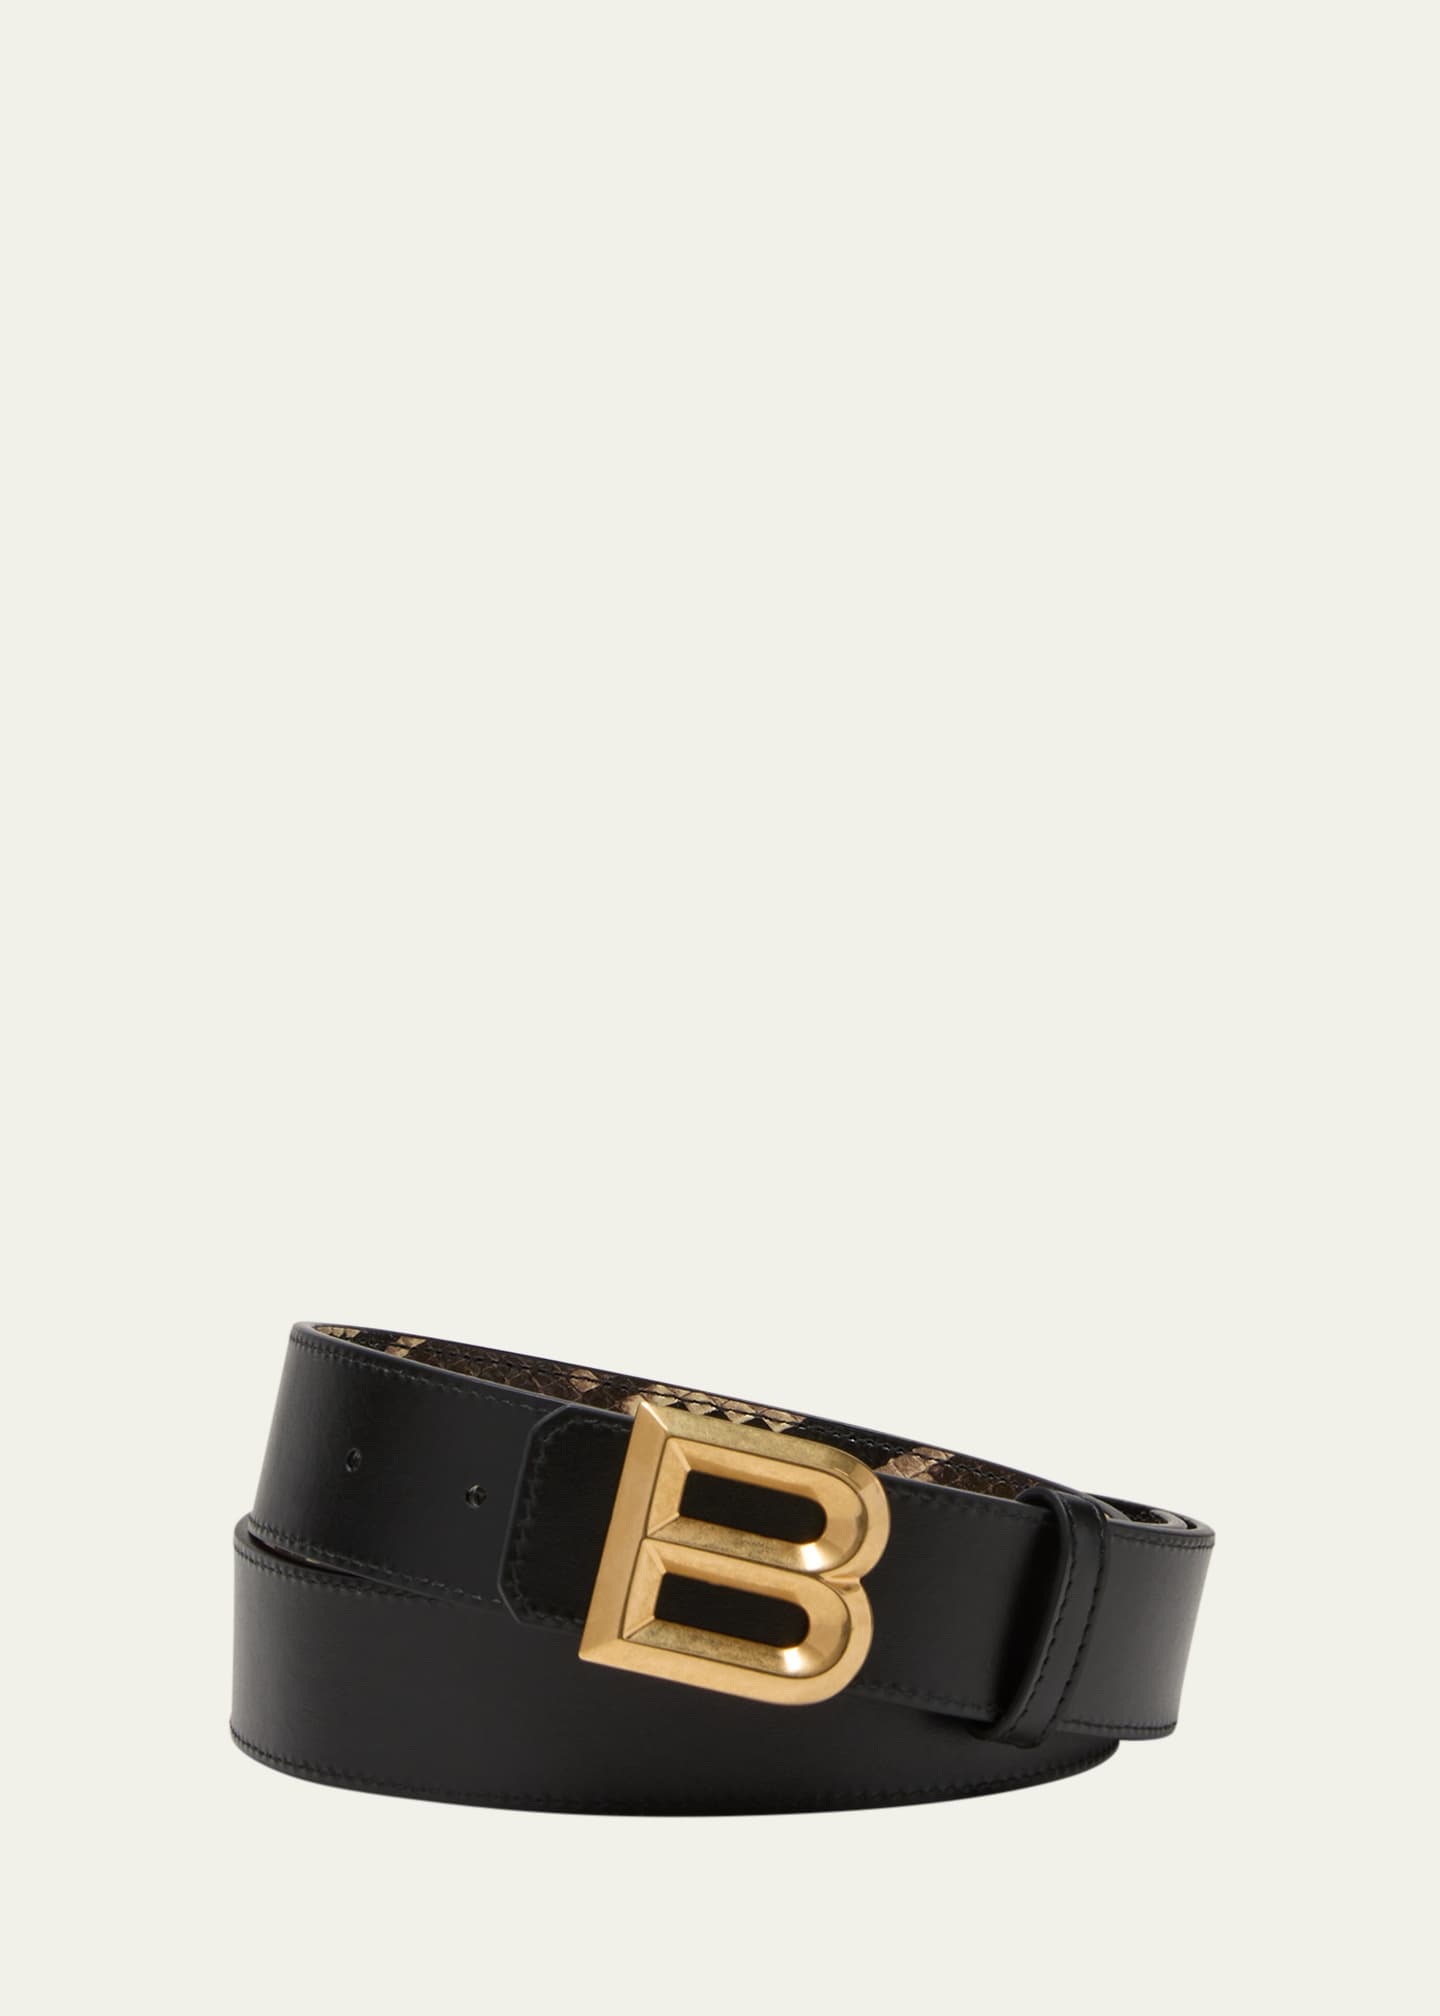 Bally B Bold 35mm Belt in Black Leather 95